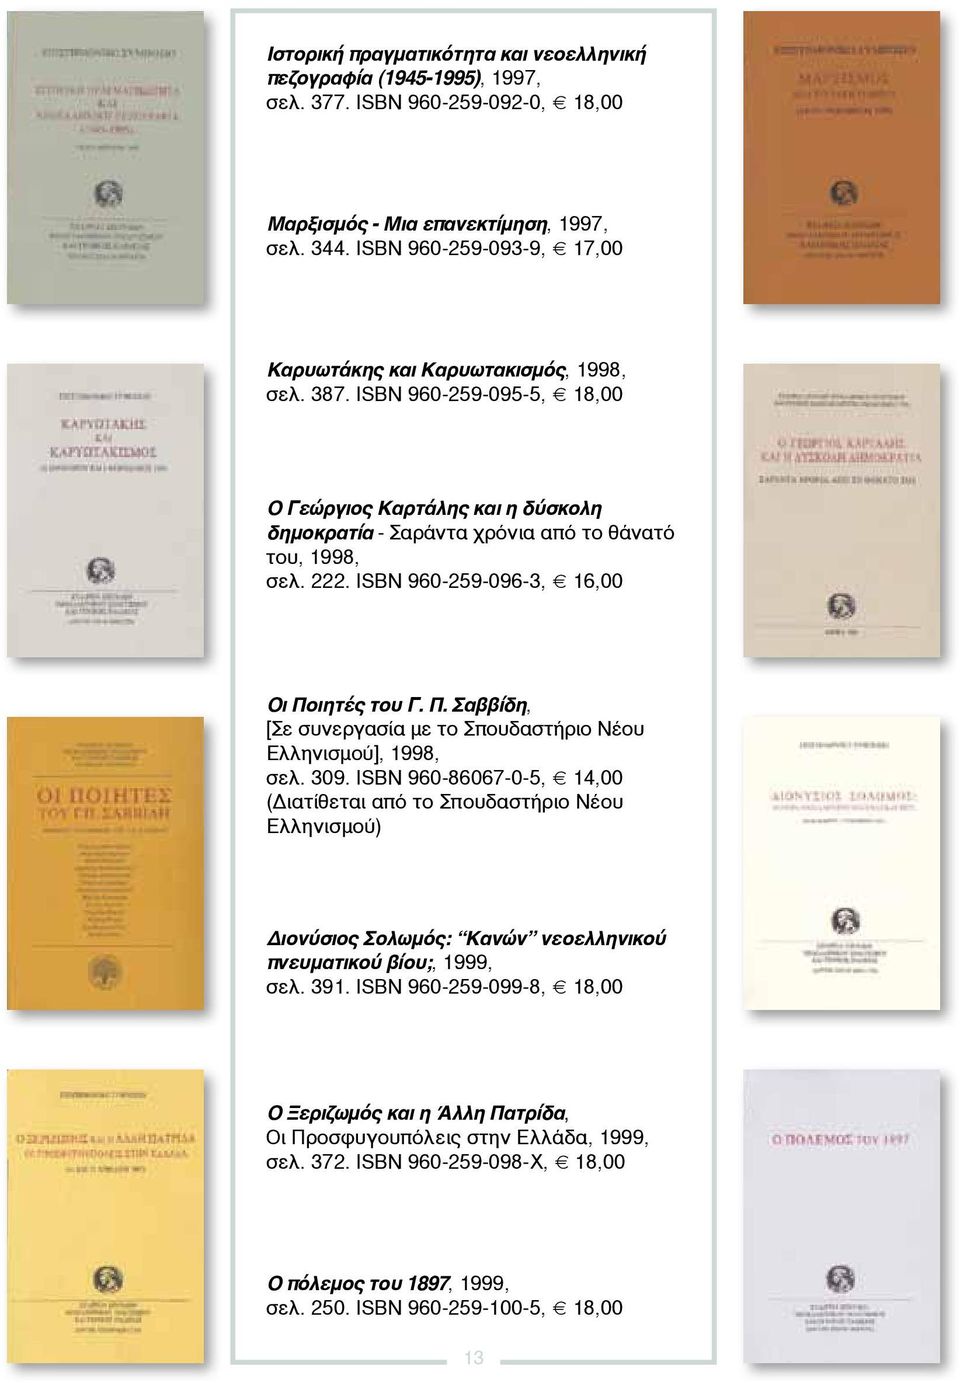 ISBN 960-259-096-3, 16,00 Οι Ποιητές του Γ. Π. Σαββίδη, [Σε συνεργασία με το Σπουδαστήριο Νέου Ελληνισμού], 1998, σελ. 309.